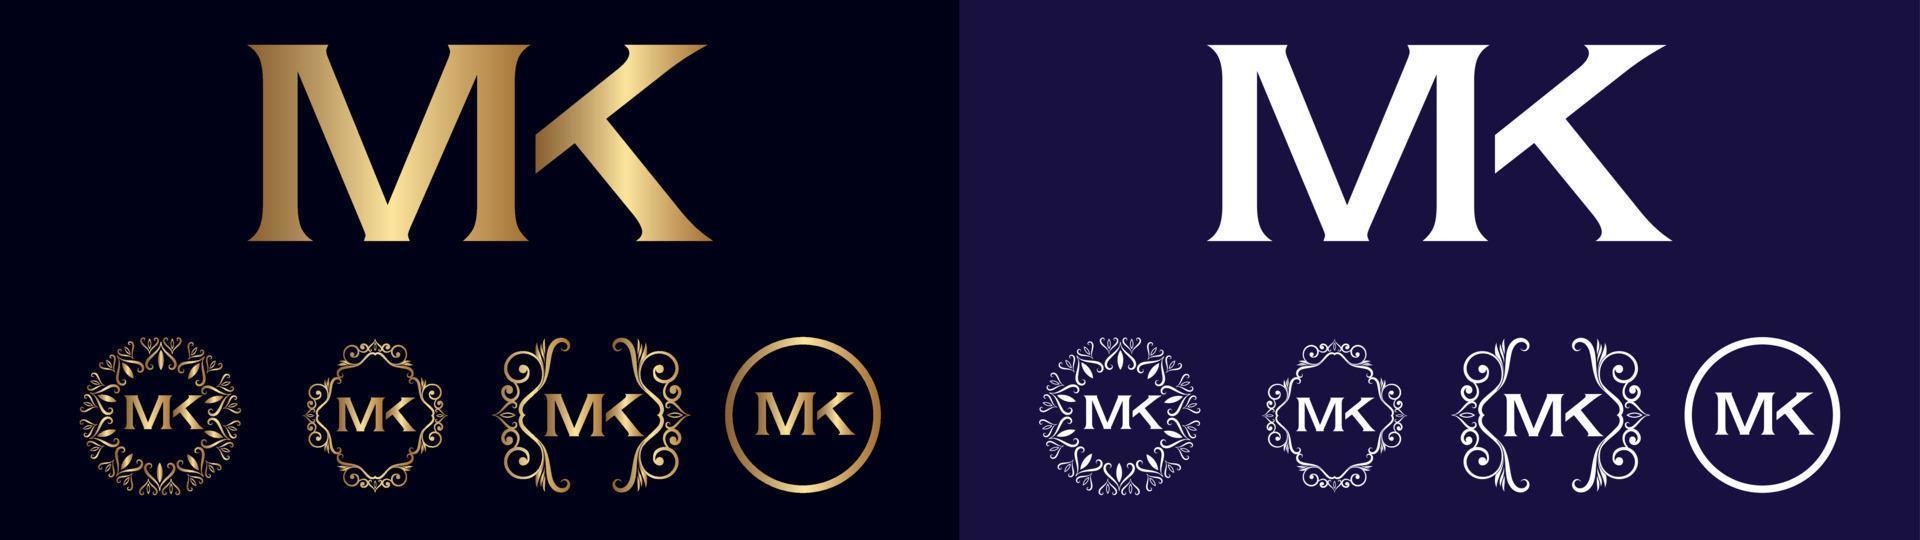 design de logotipo de marca corporativa mk vetor